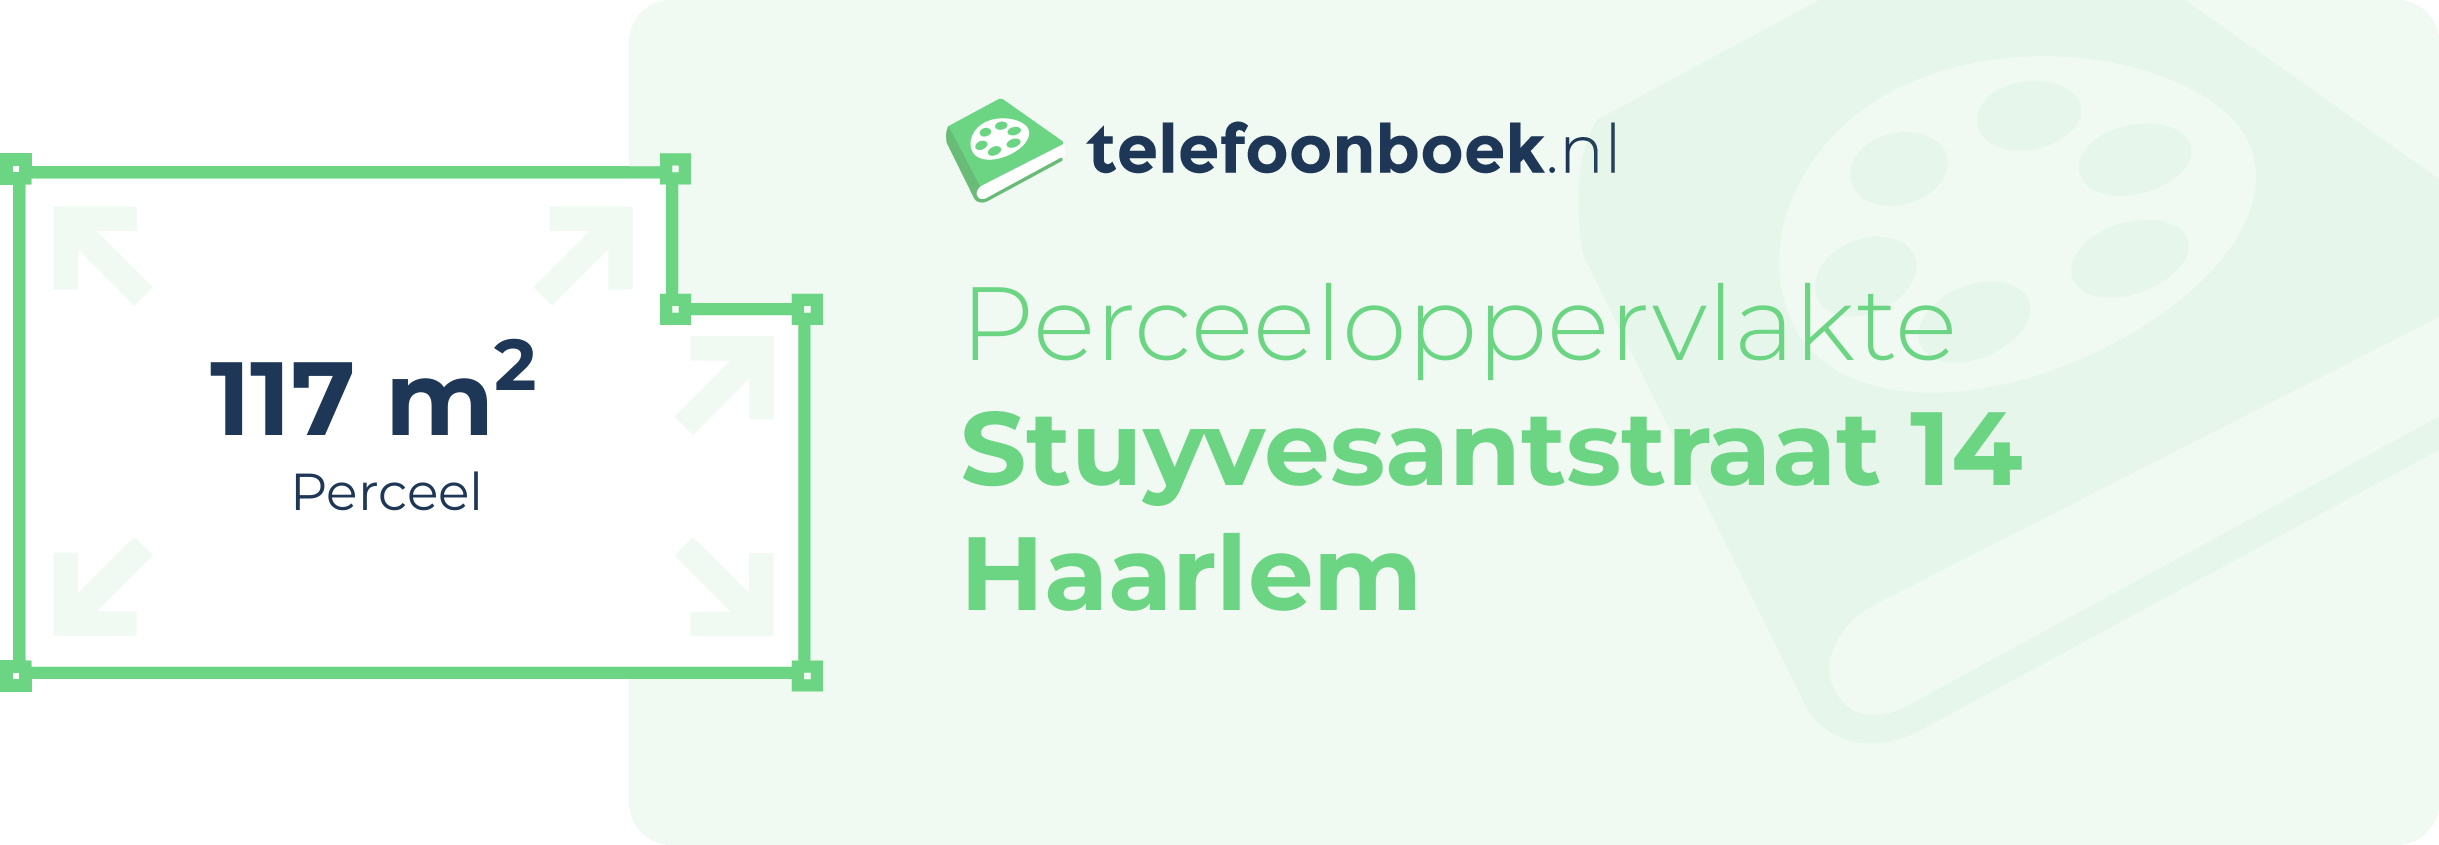 Perceeloppervlakte Stuyvesantstraat 14 Haarlem